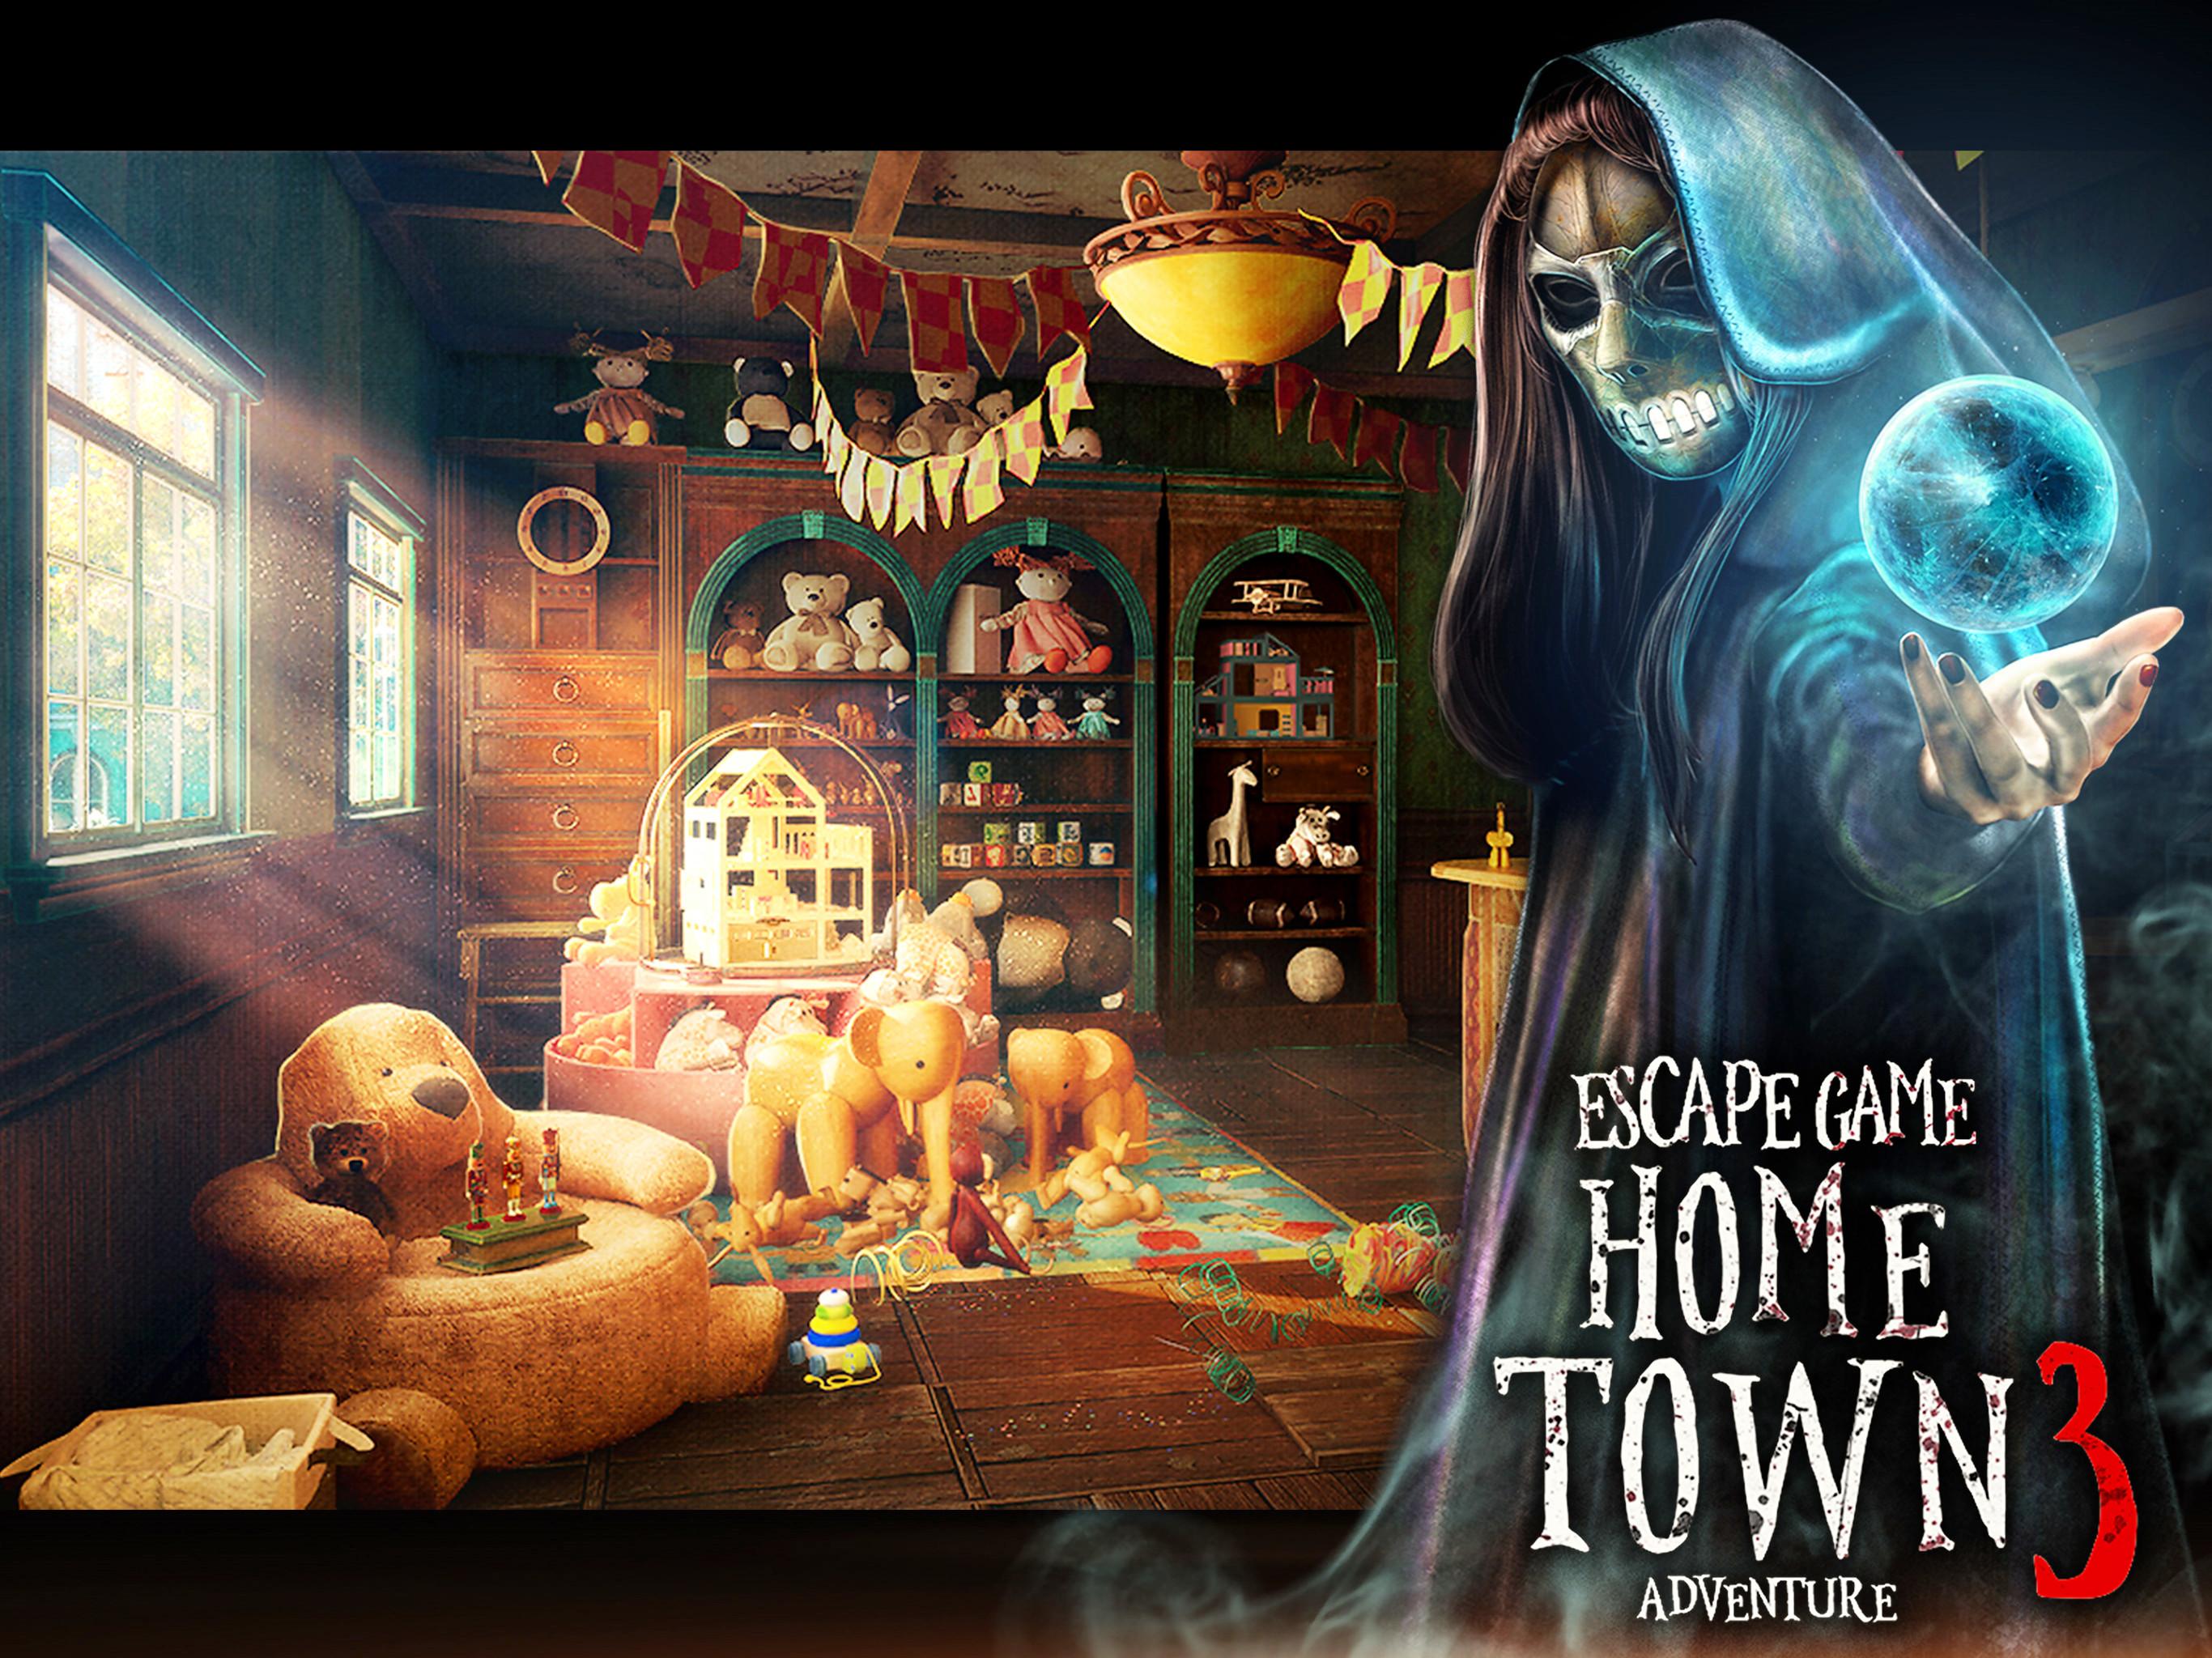 Escape games town adventures. Home Town Adventure прохождение. Пройти квест с дверью в игре Home Town Adventure Escape games. Пройти квест с дверью в игре Home Town Adventure. Ответы на головоломки в игре Home Town Adventure.